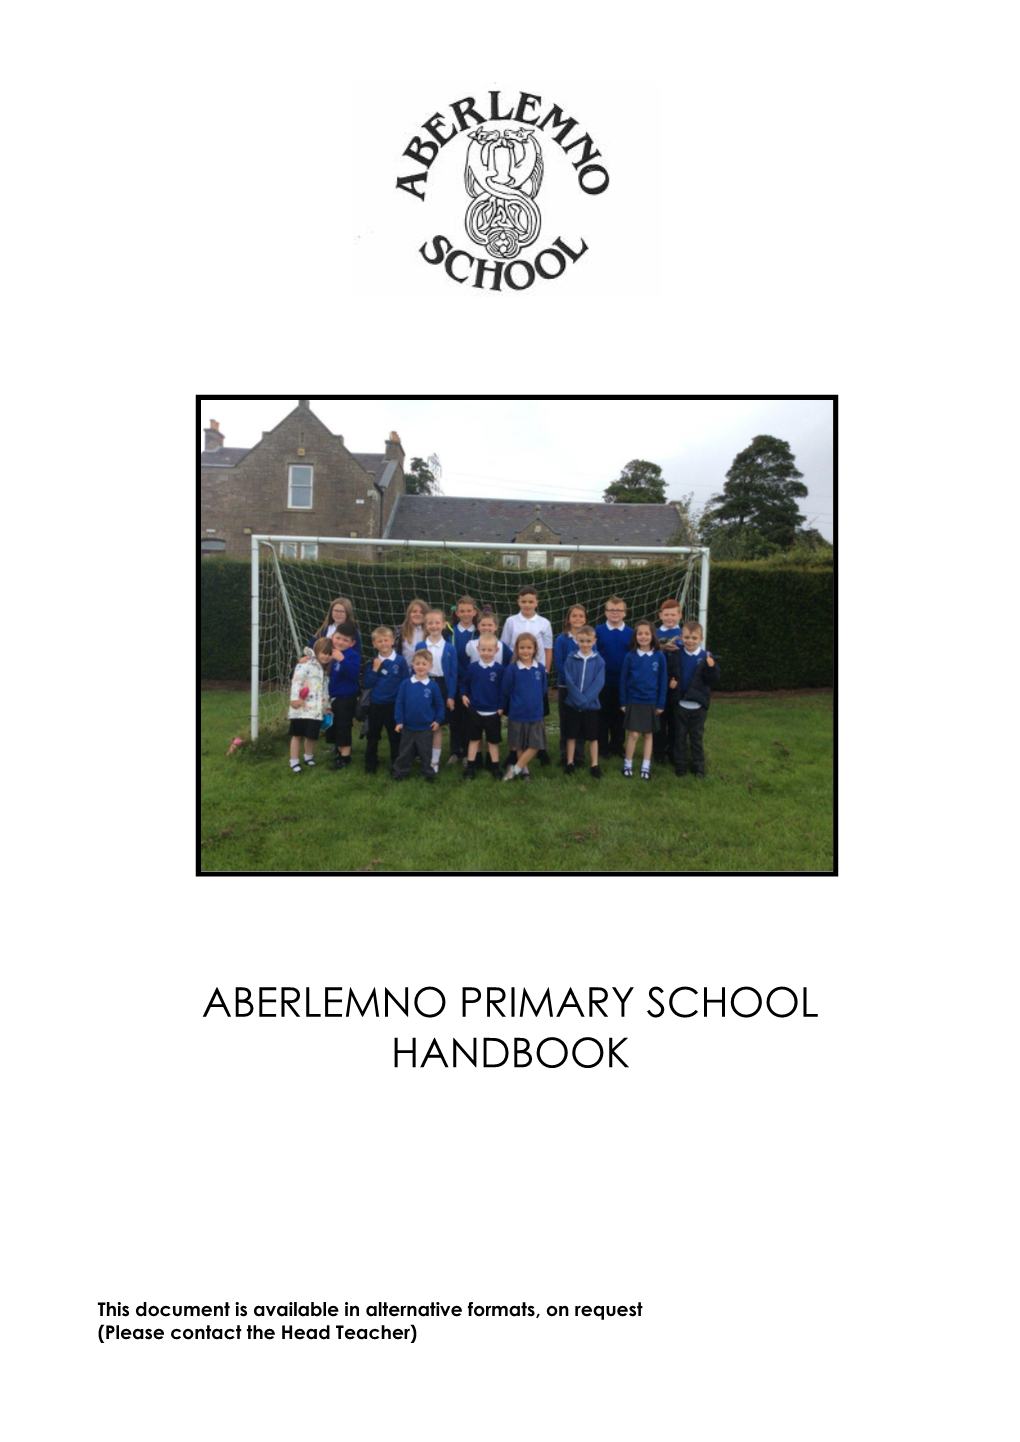 Aberlemno Primary School Handbook 2018/19